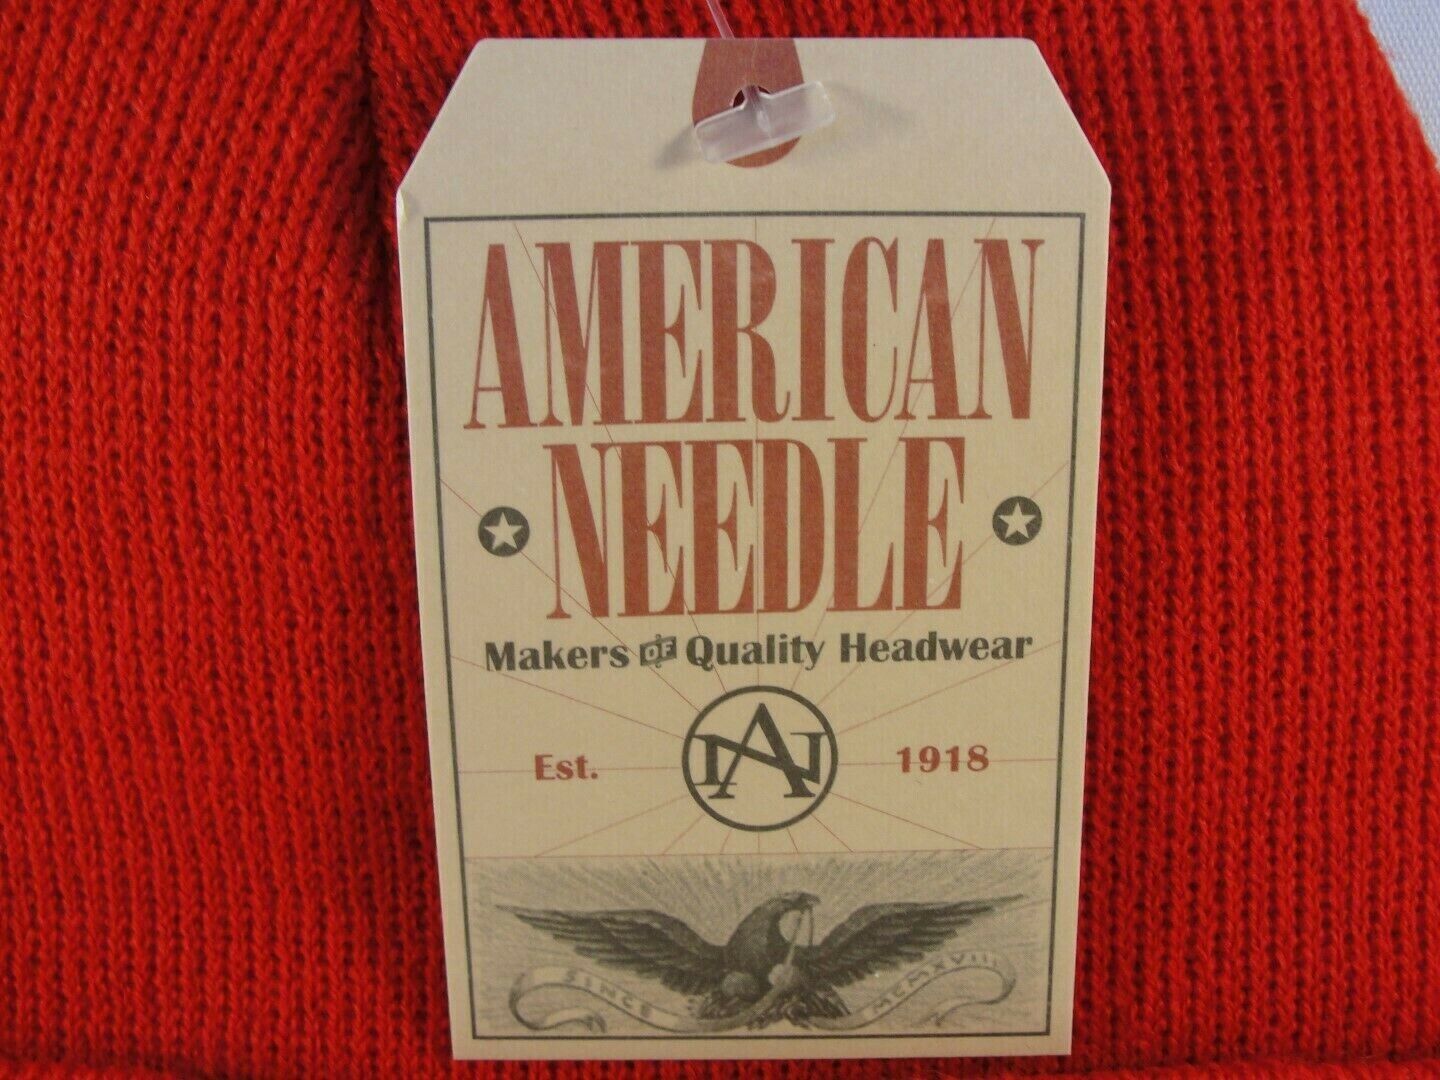 Washington Capitals Red American Needle Cuffed Knit Beanie Hat